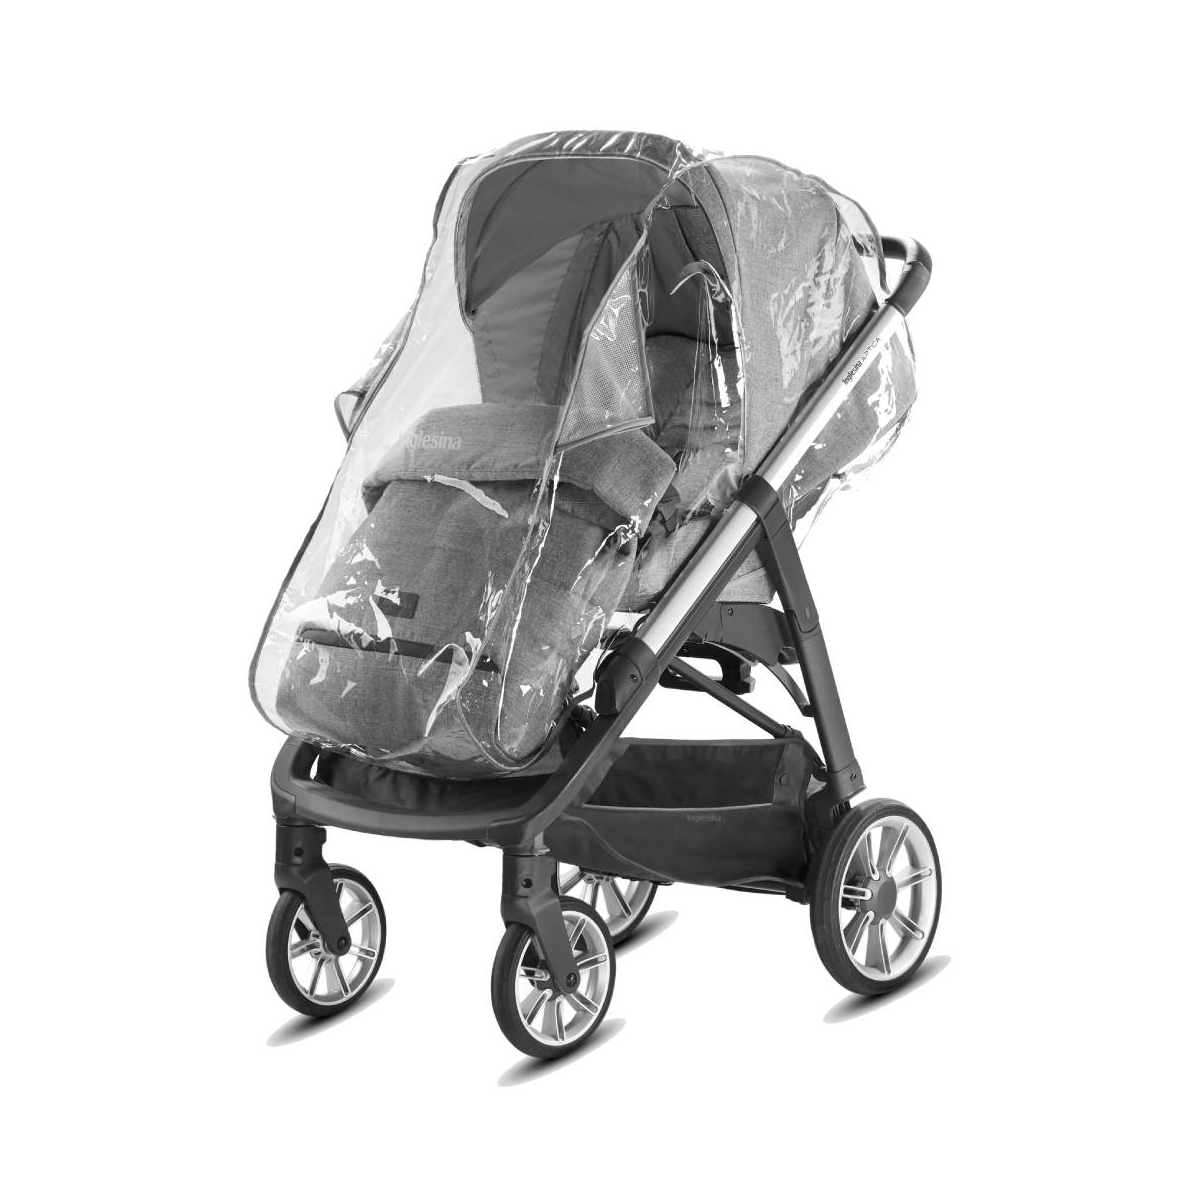 https://www.kiddies-kingdom.com/202022-thickbox_default/inglesina-raincover-for-stroller-aptica-and-aptica-xt.jpg